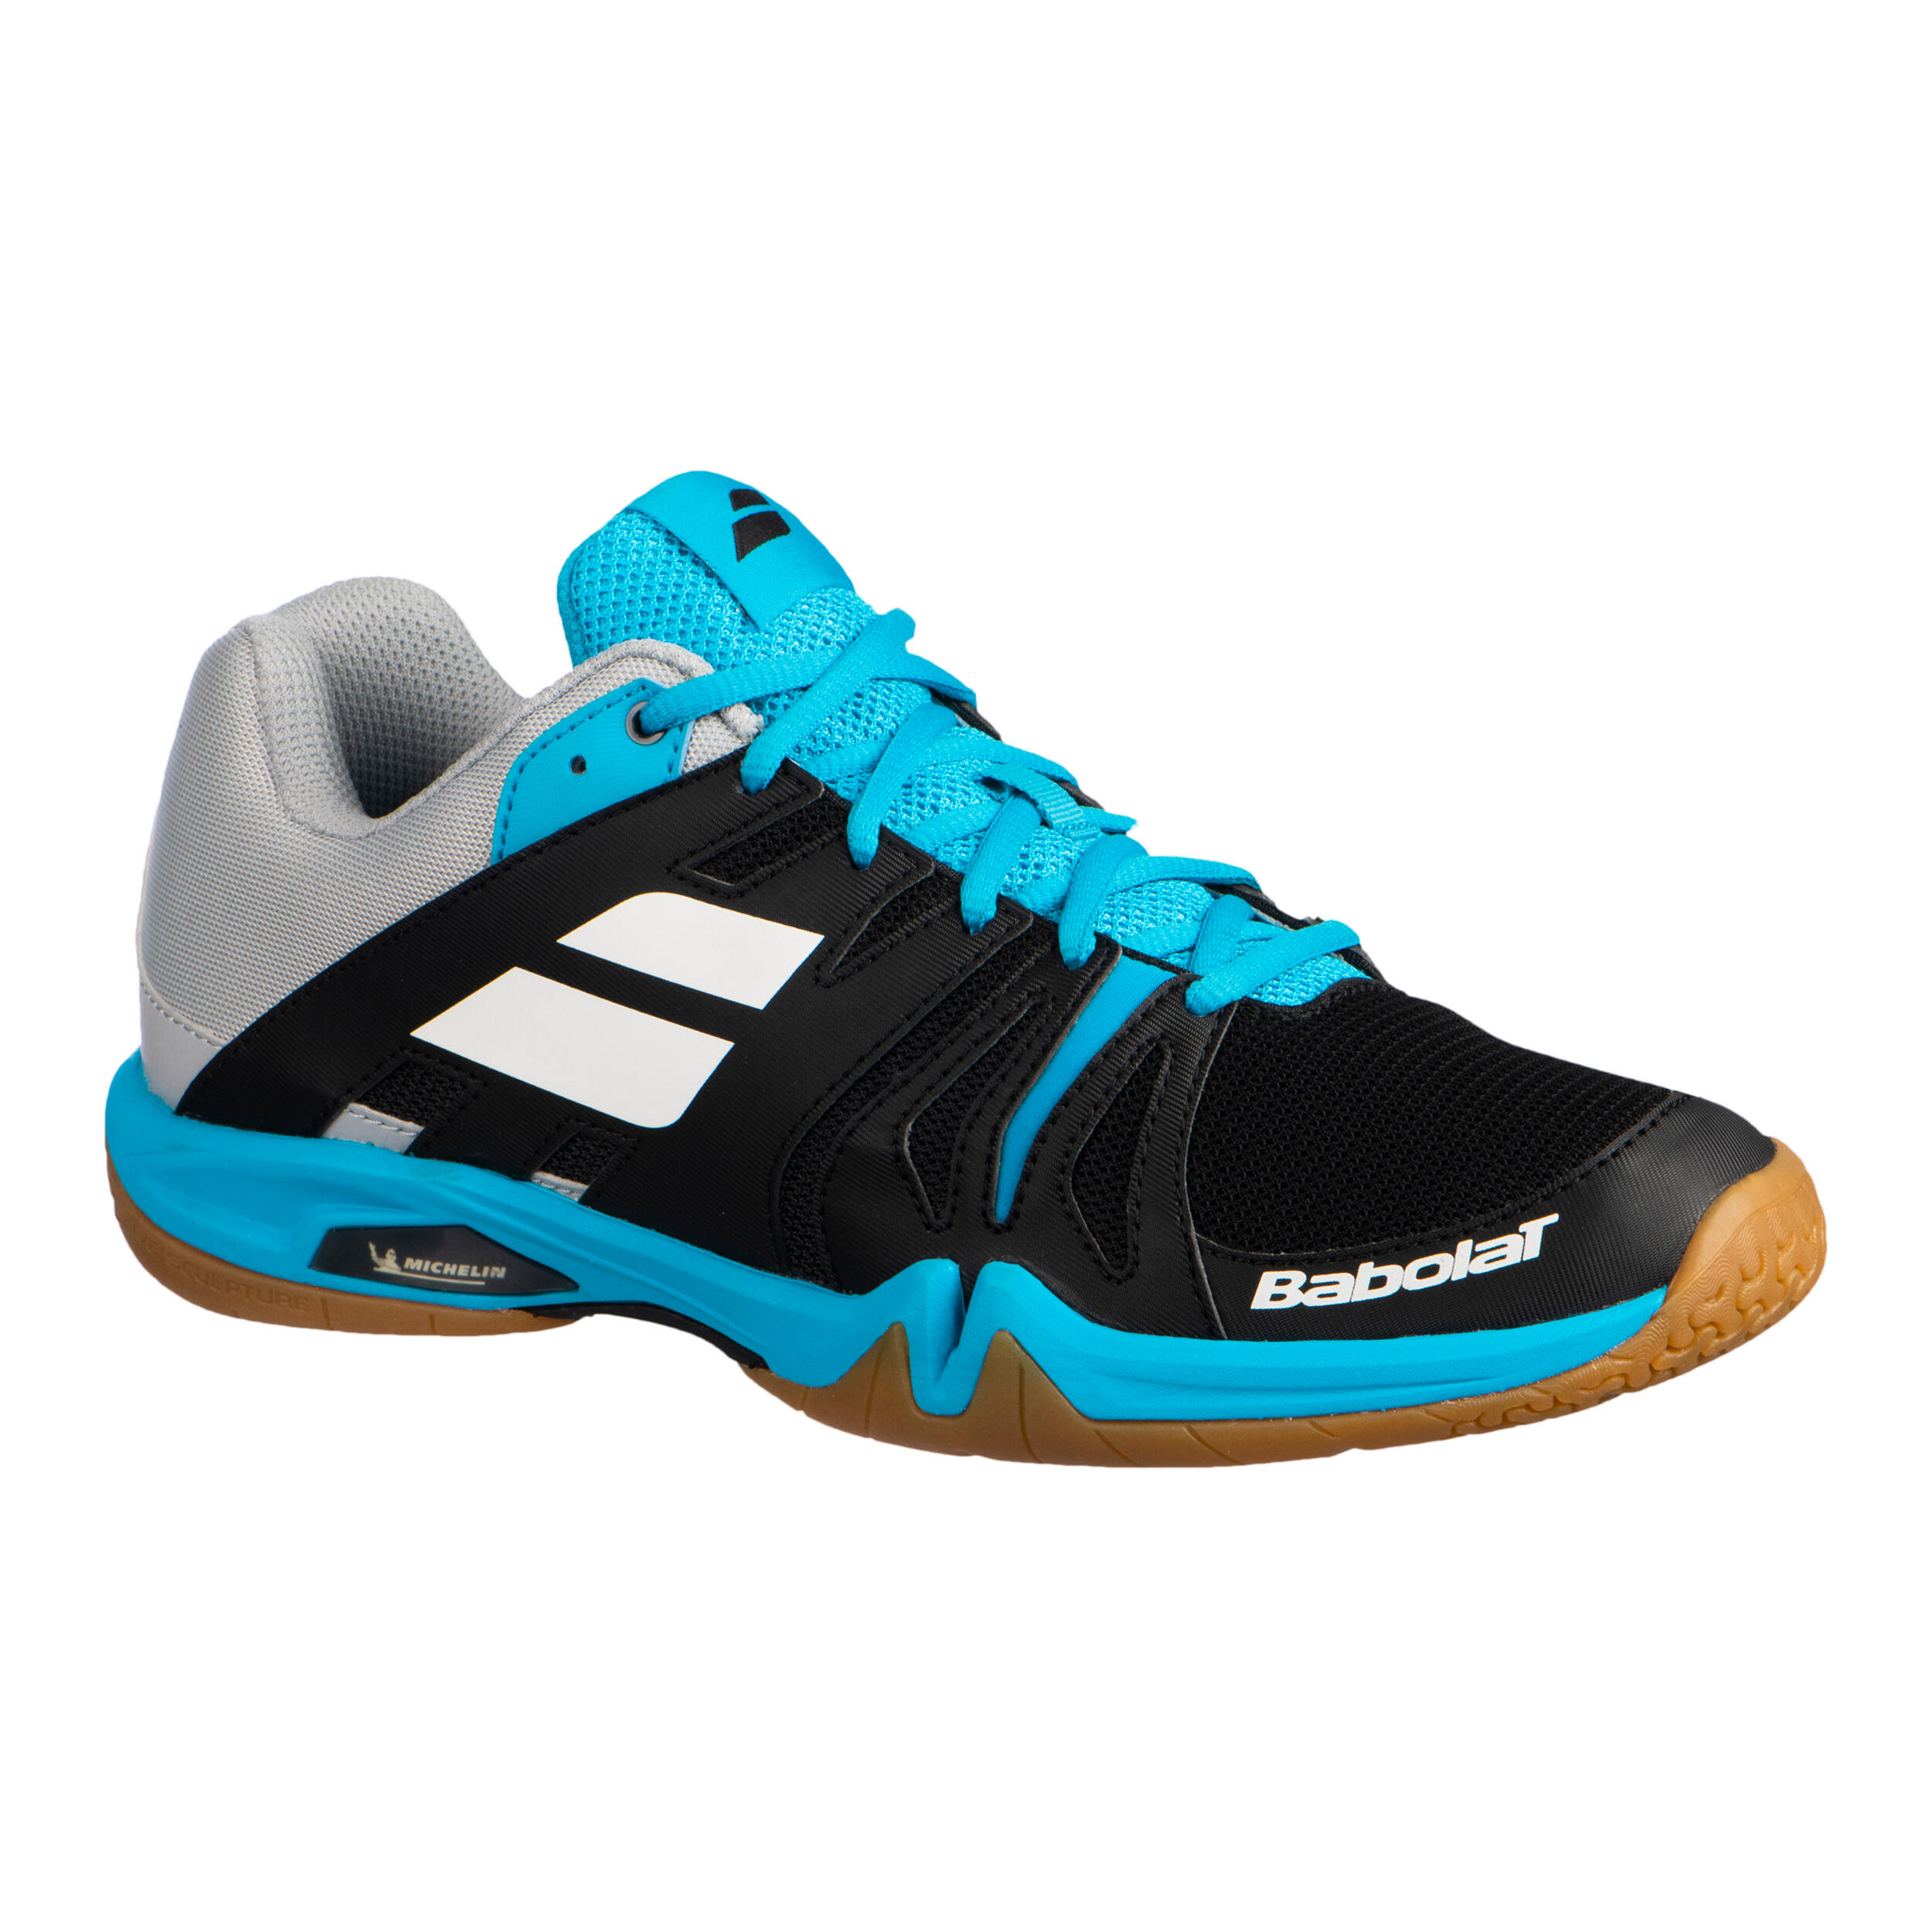 Babolat Shadow Tour Schuhe Badminton Squash Hallenschuhe Indoor blau 30S1801 175 